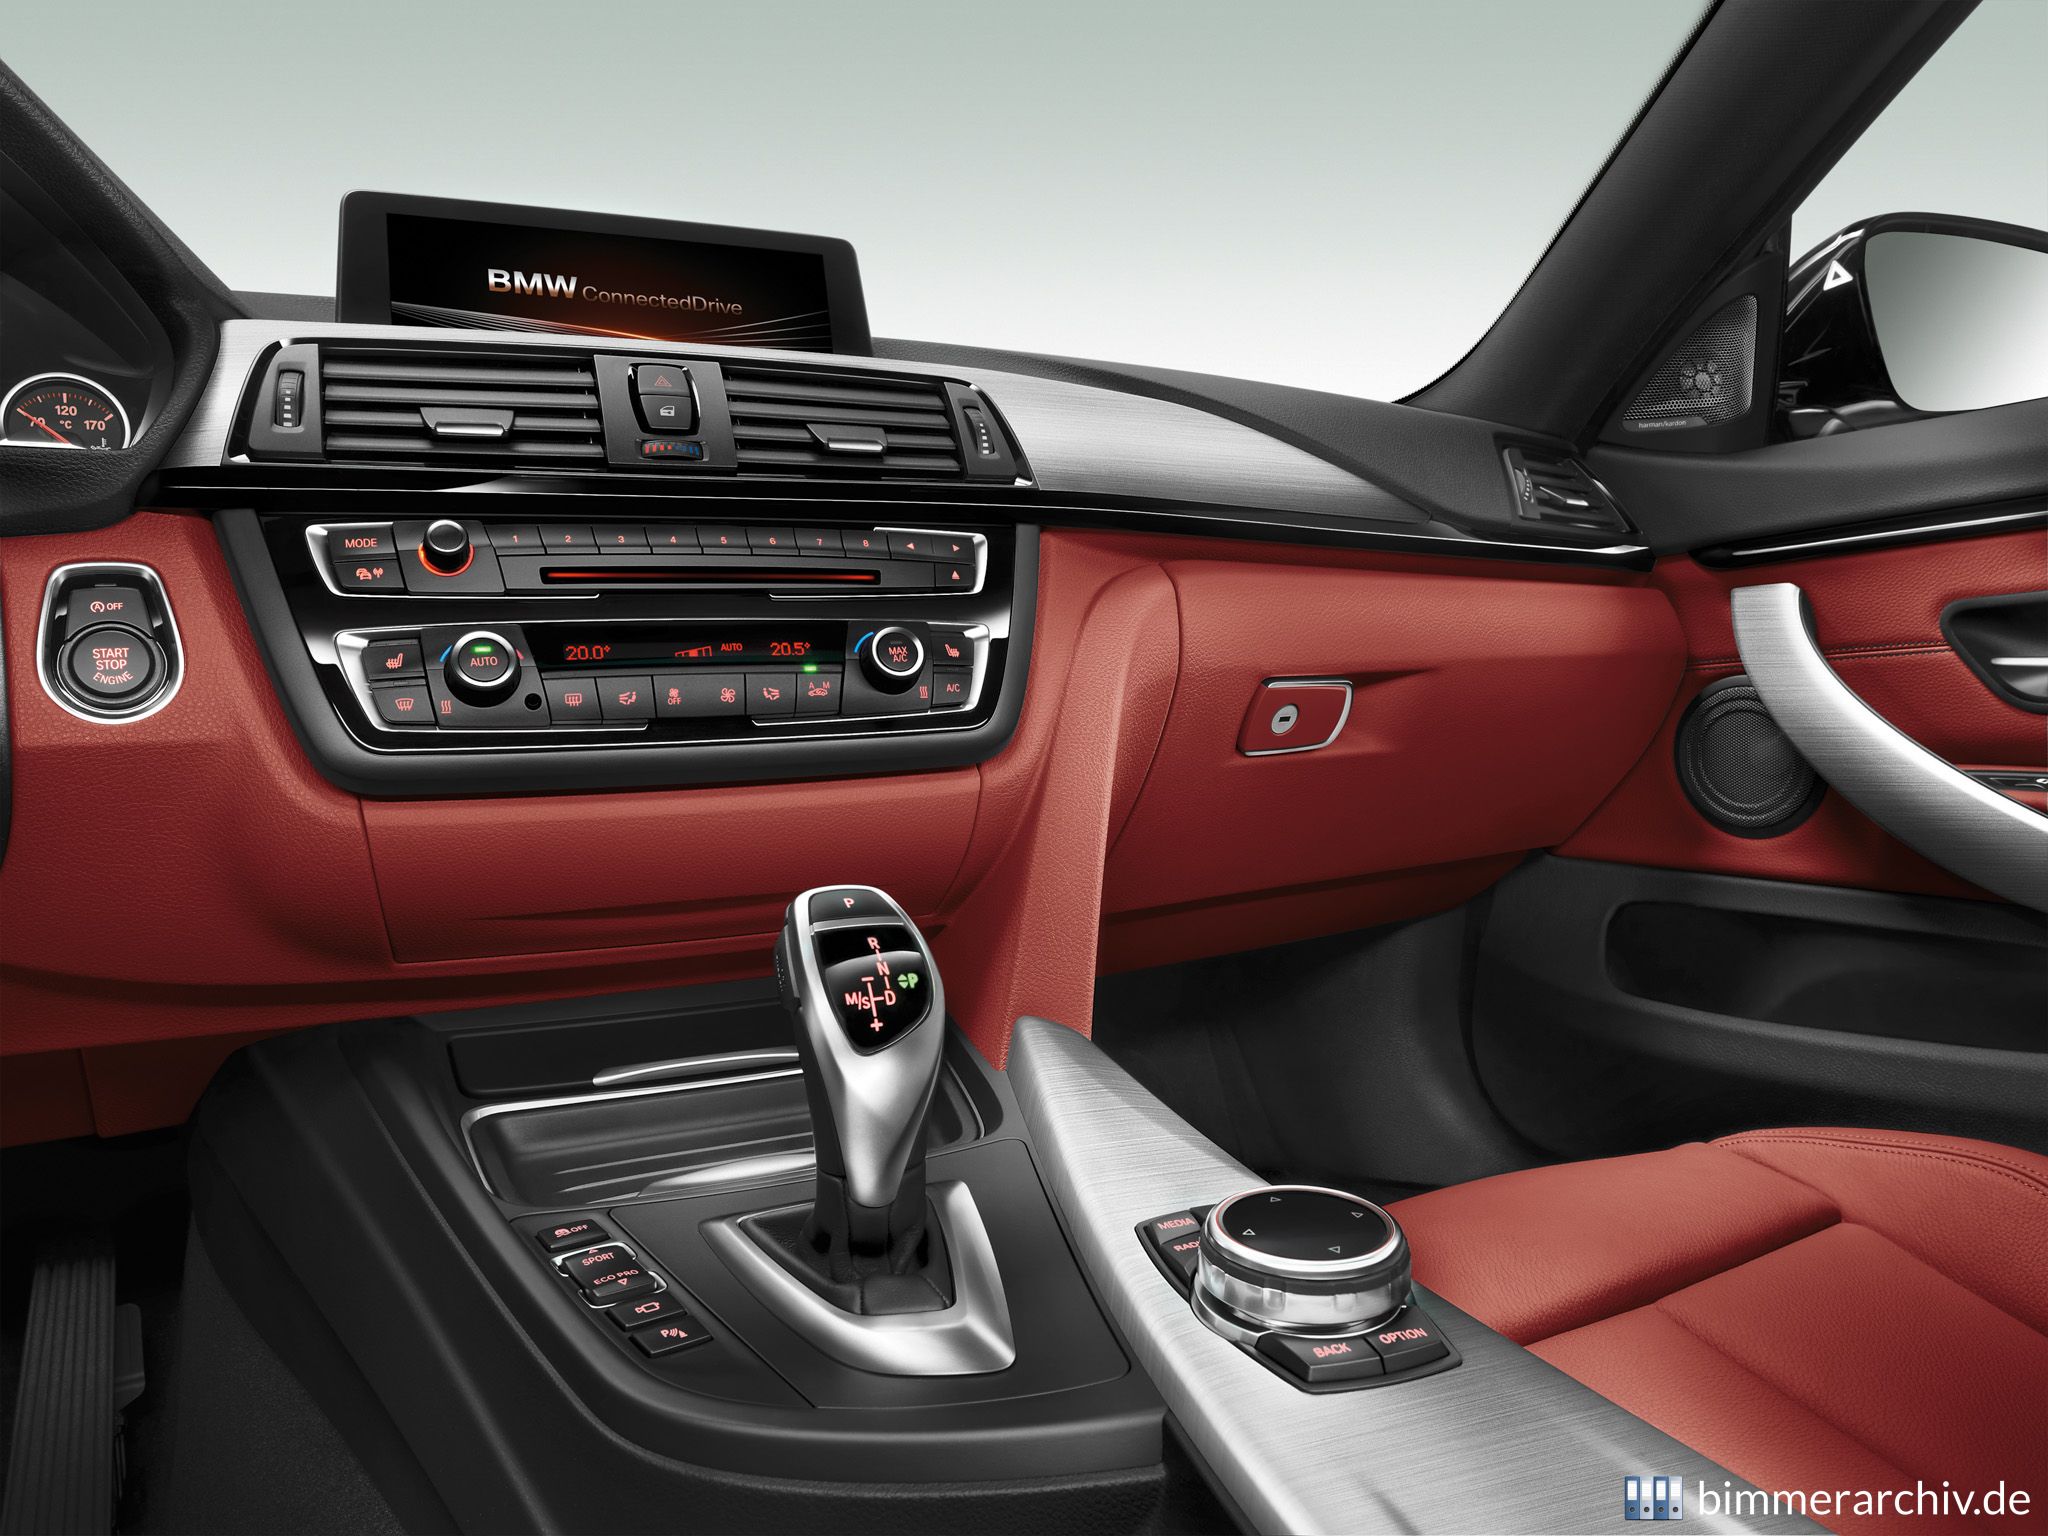 BMW 4 Series Gran Coupé – Coral Red Dakota leather